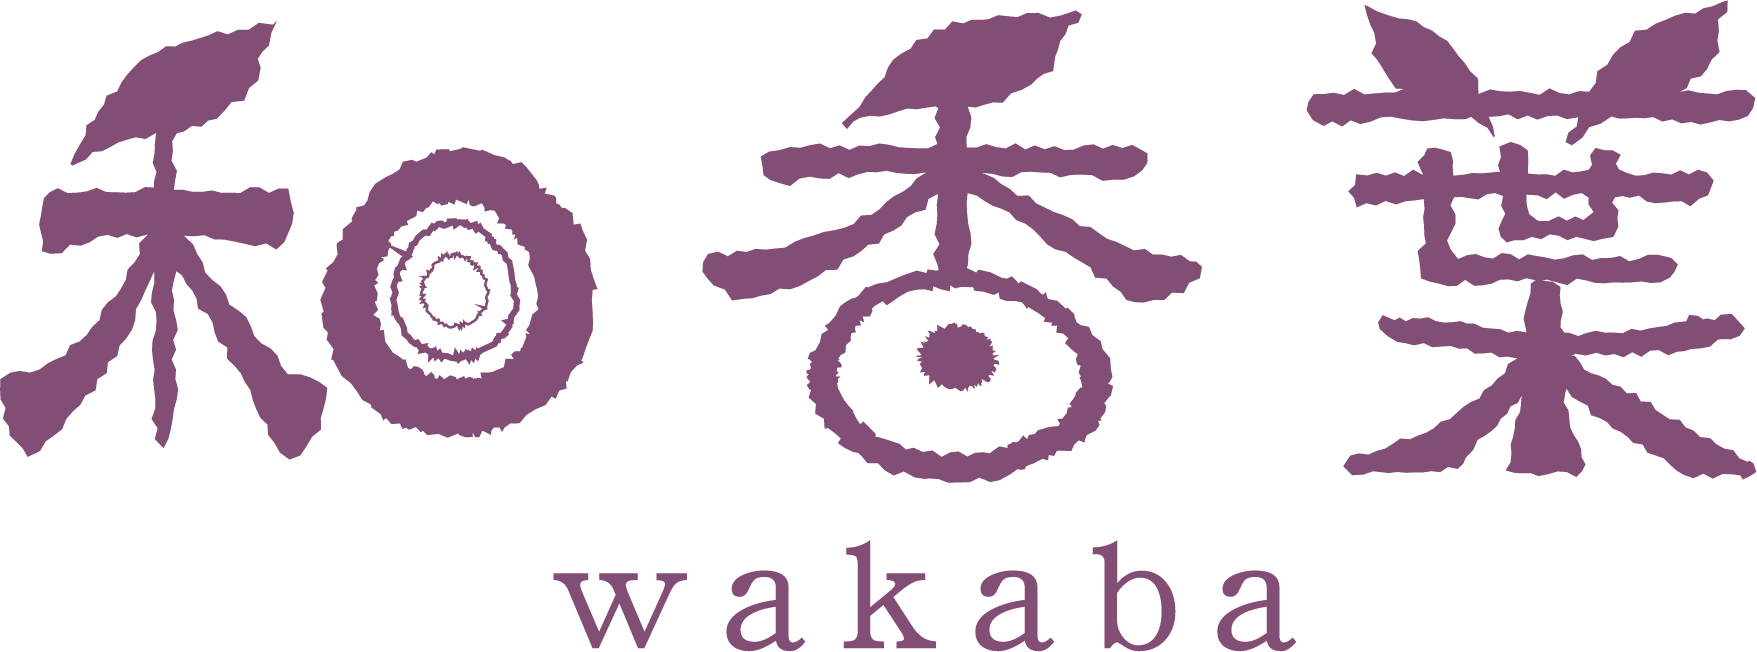 wakabaherb